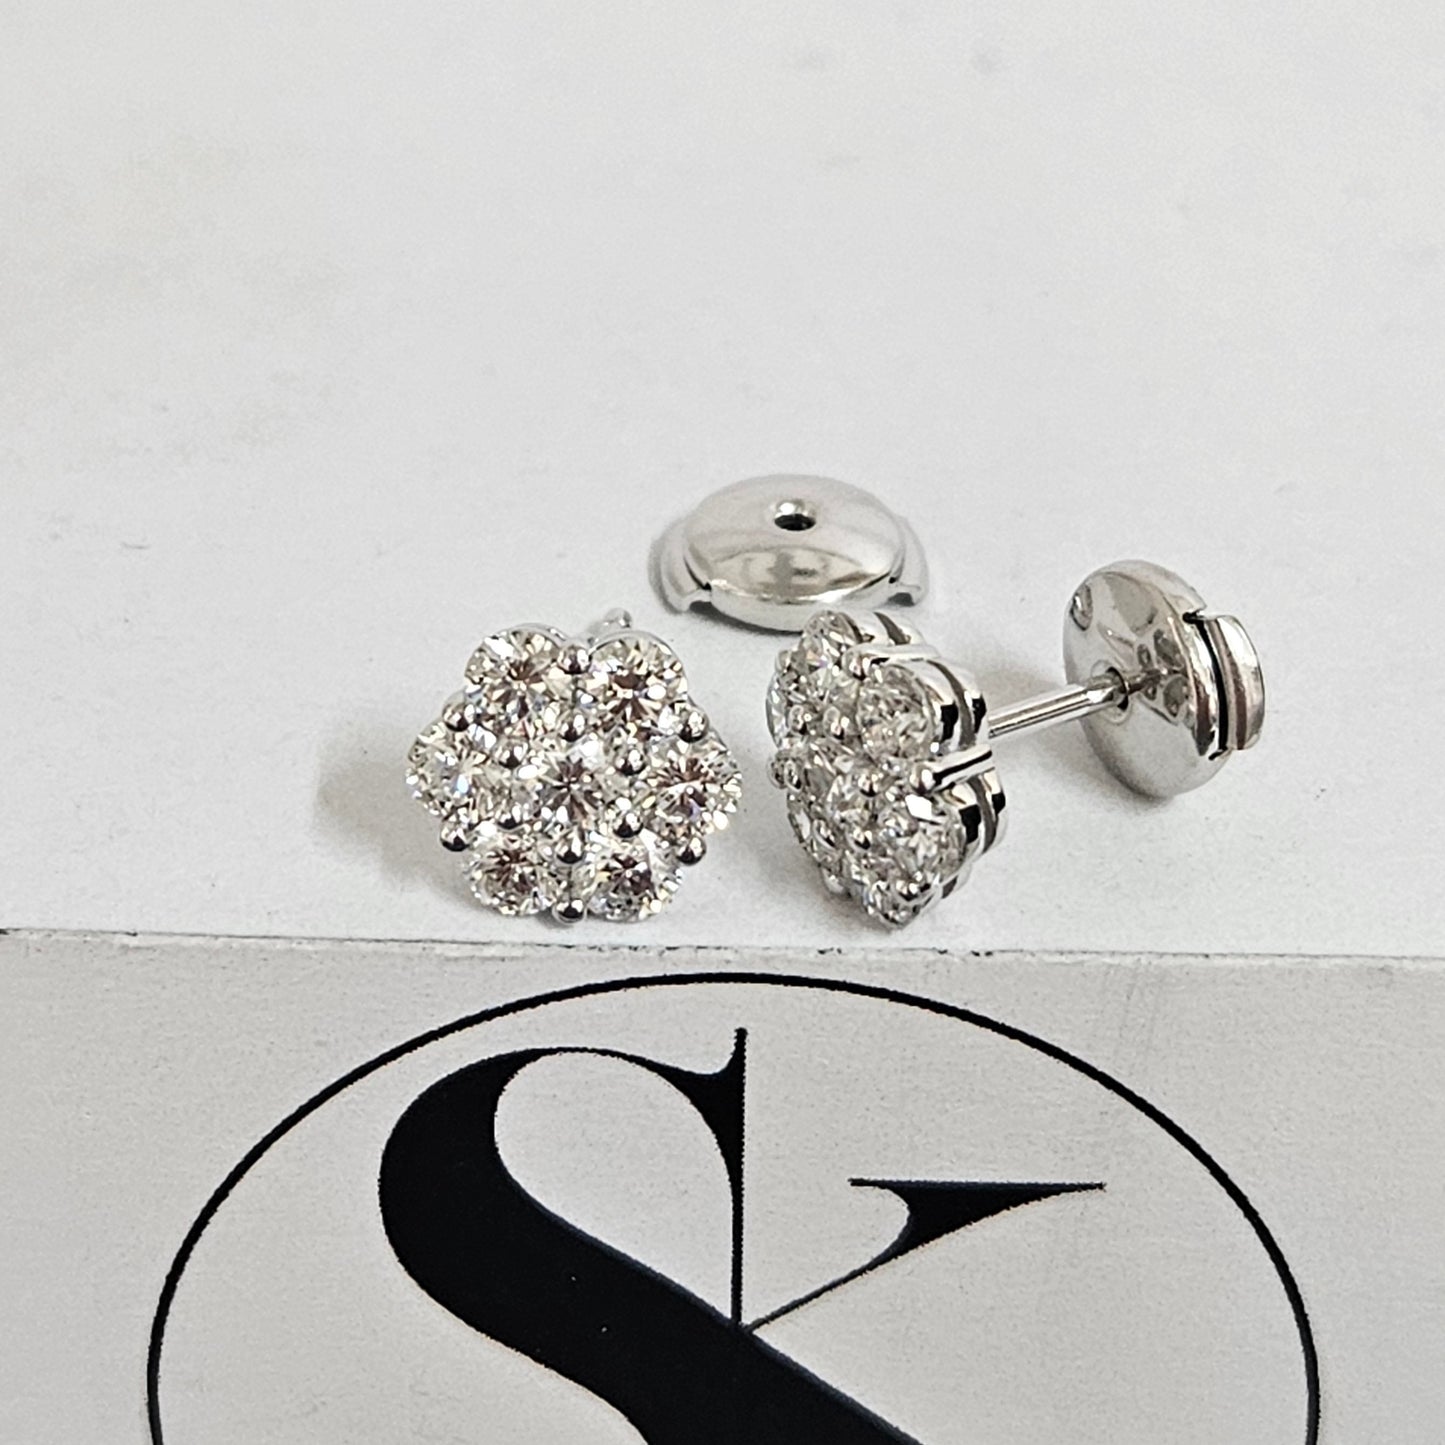 1.6ct Diamond Cluster Earrings/Natural Diamond  European lock closure Earrings/14K ,18K gold Halo 9.2mm Stud Earrings/Anniversary gift